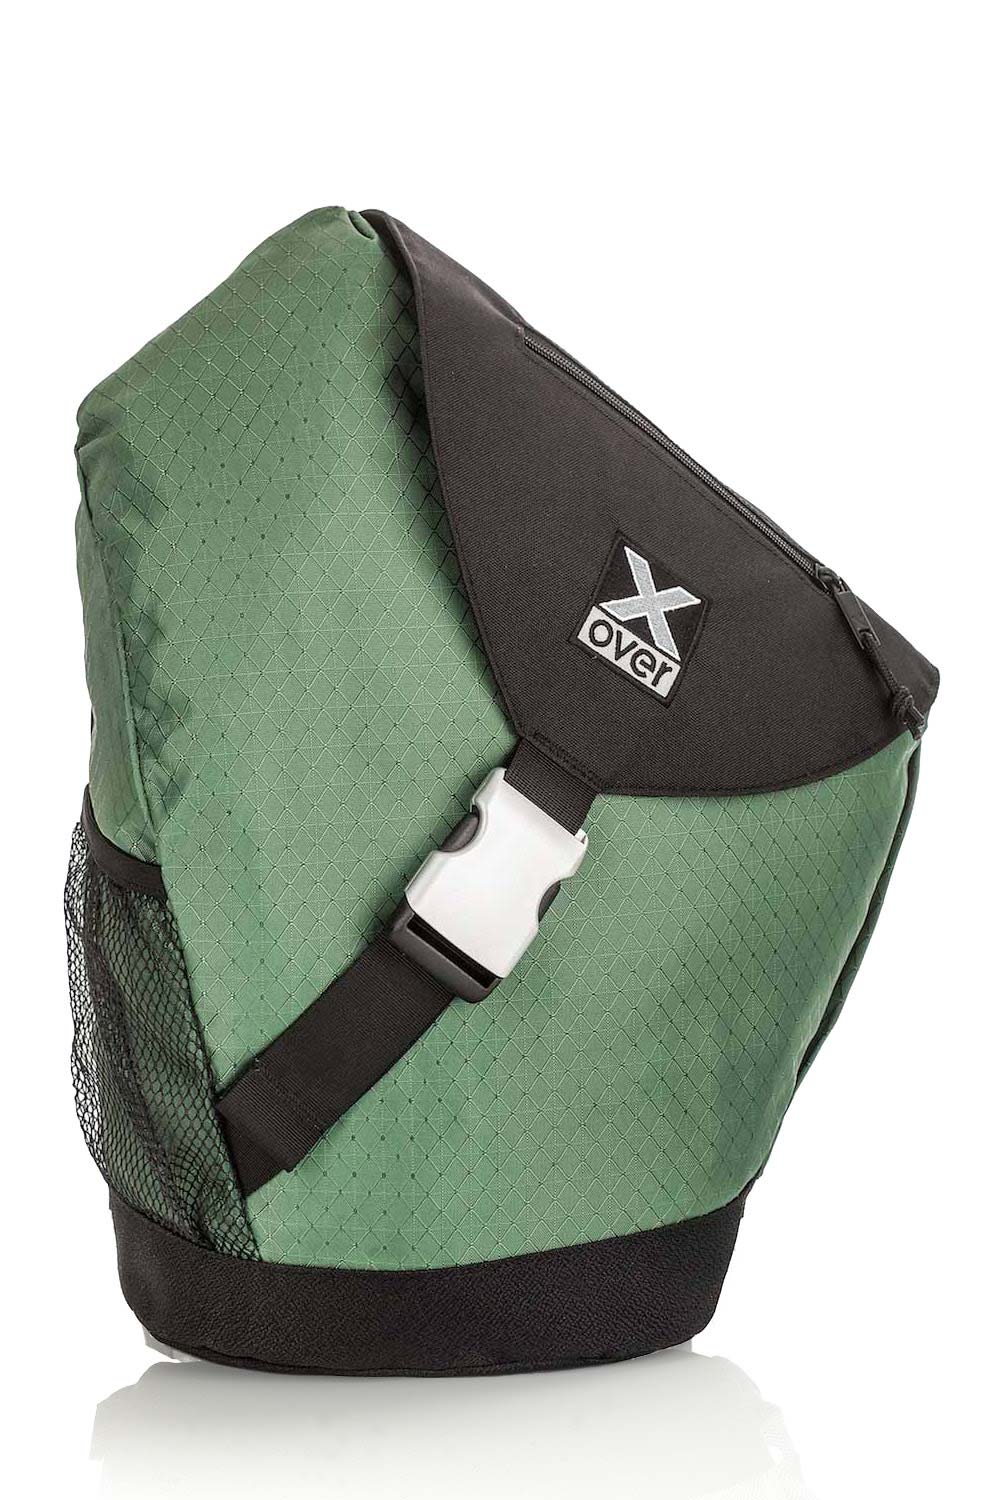 X-over Frankfurt bag in color fir green